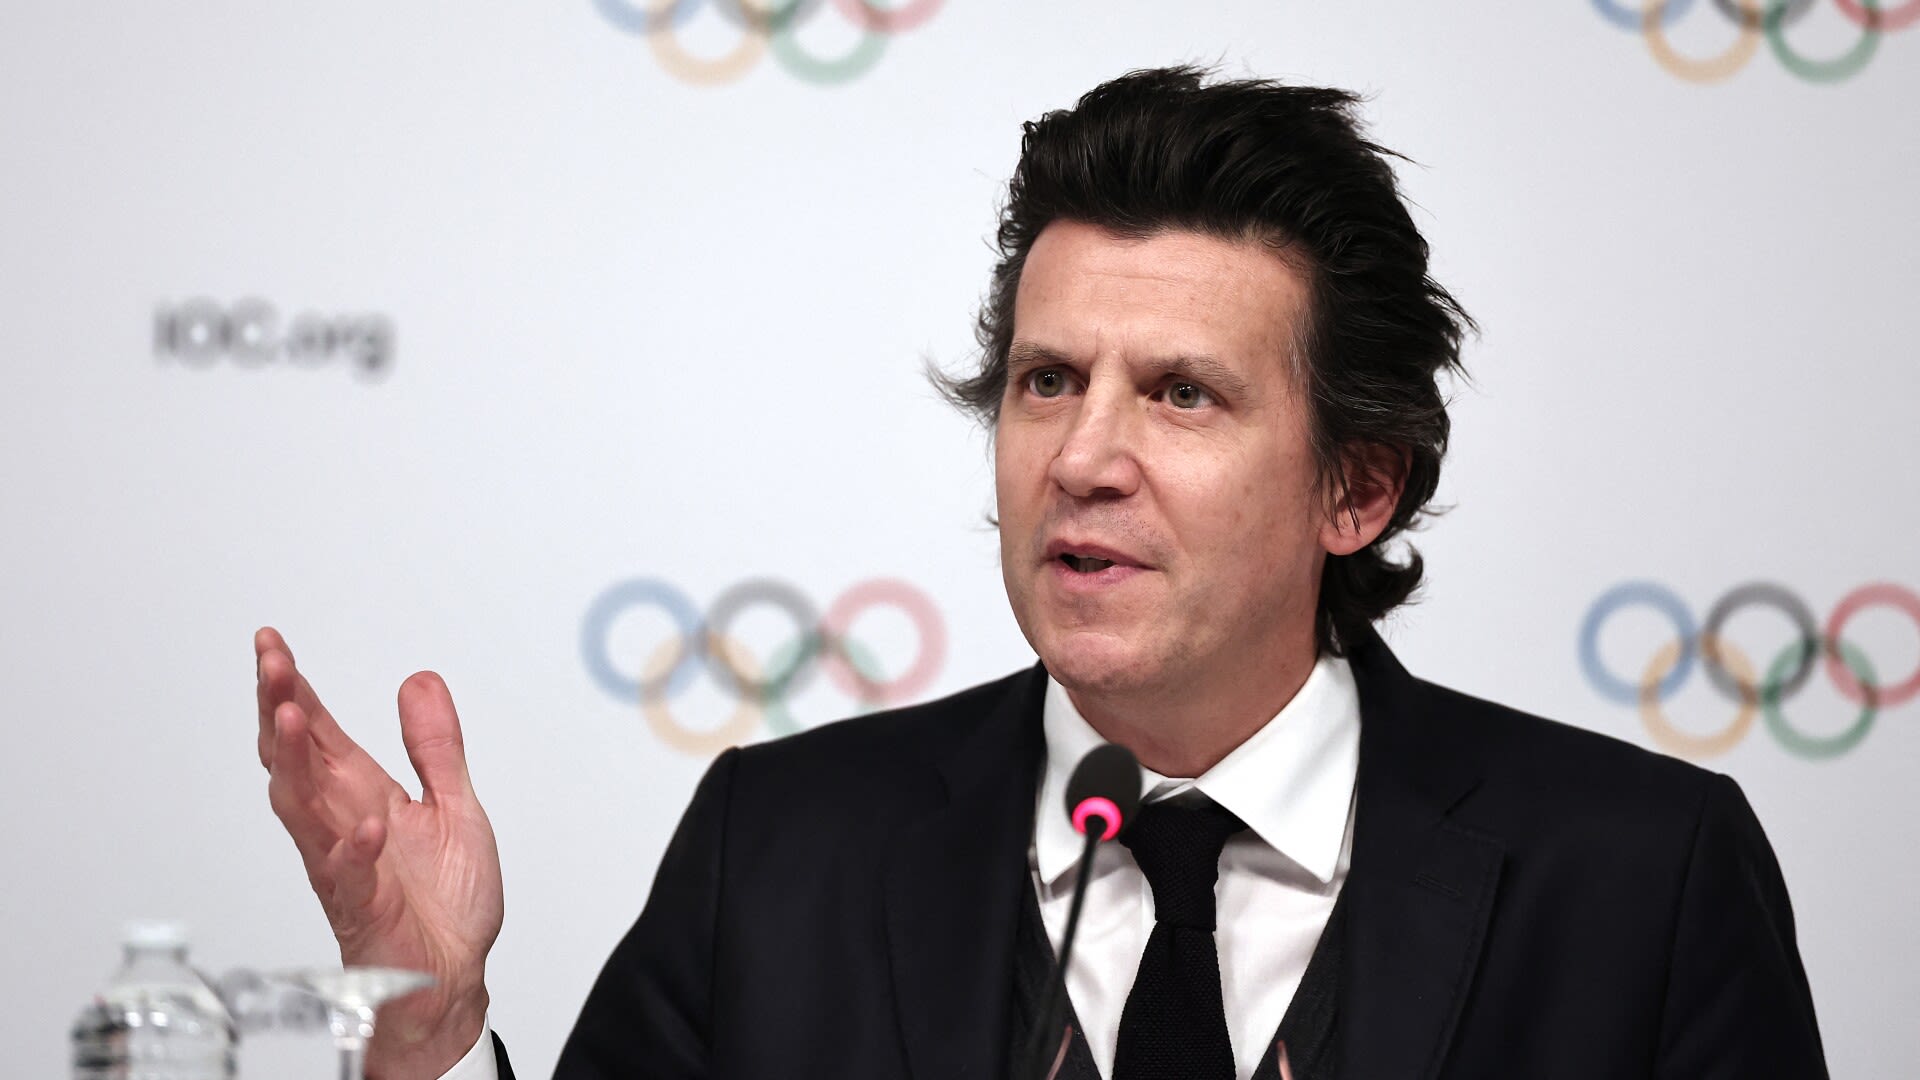 IOC's Christophe Dubi reflects on Paris 2024 economic report, looks at future Olympics